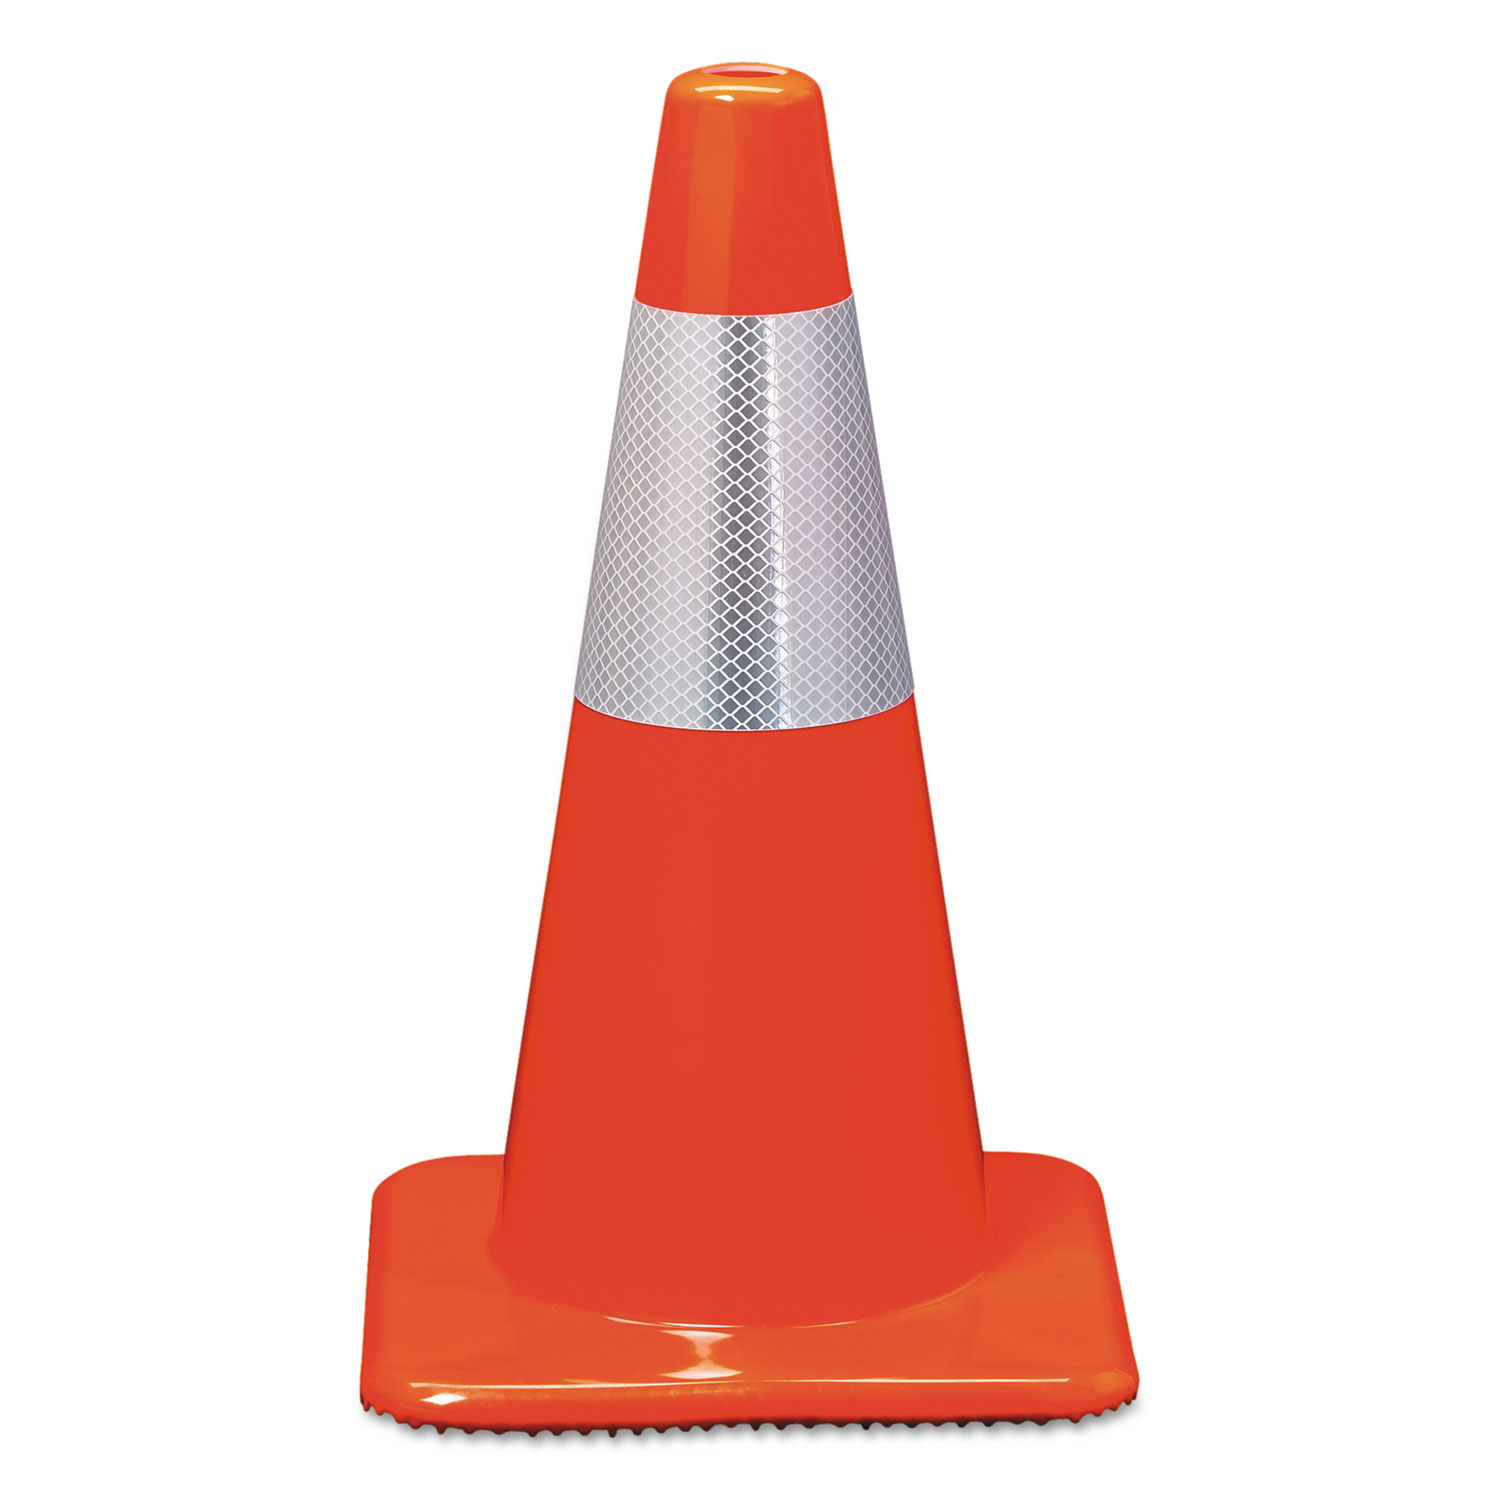  3M 90128-R Reflective Safety Cone, 11 1/2 x 11 1/2 x 18, Orange (MMM90128R) 